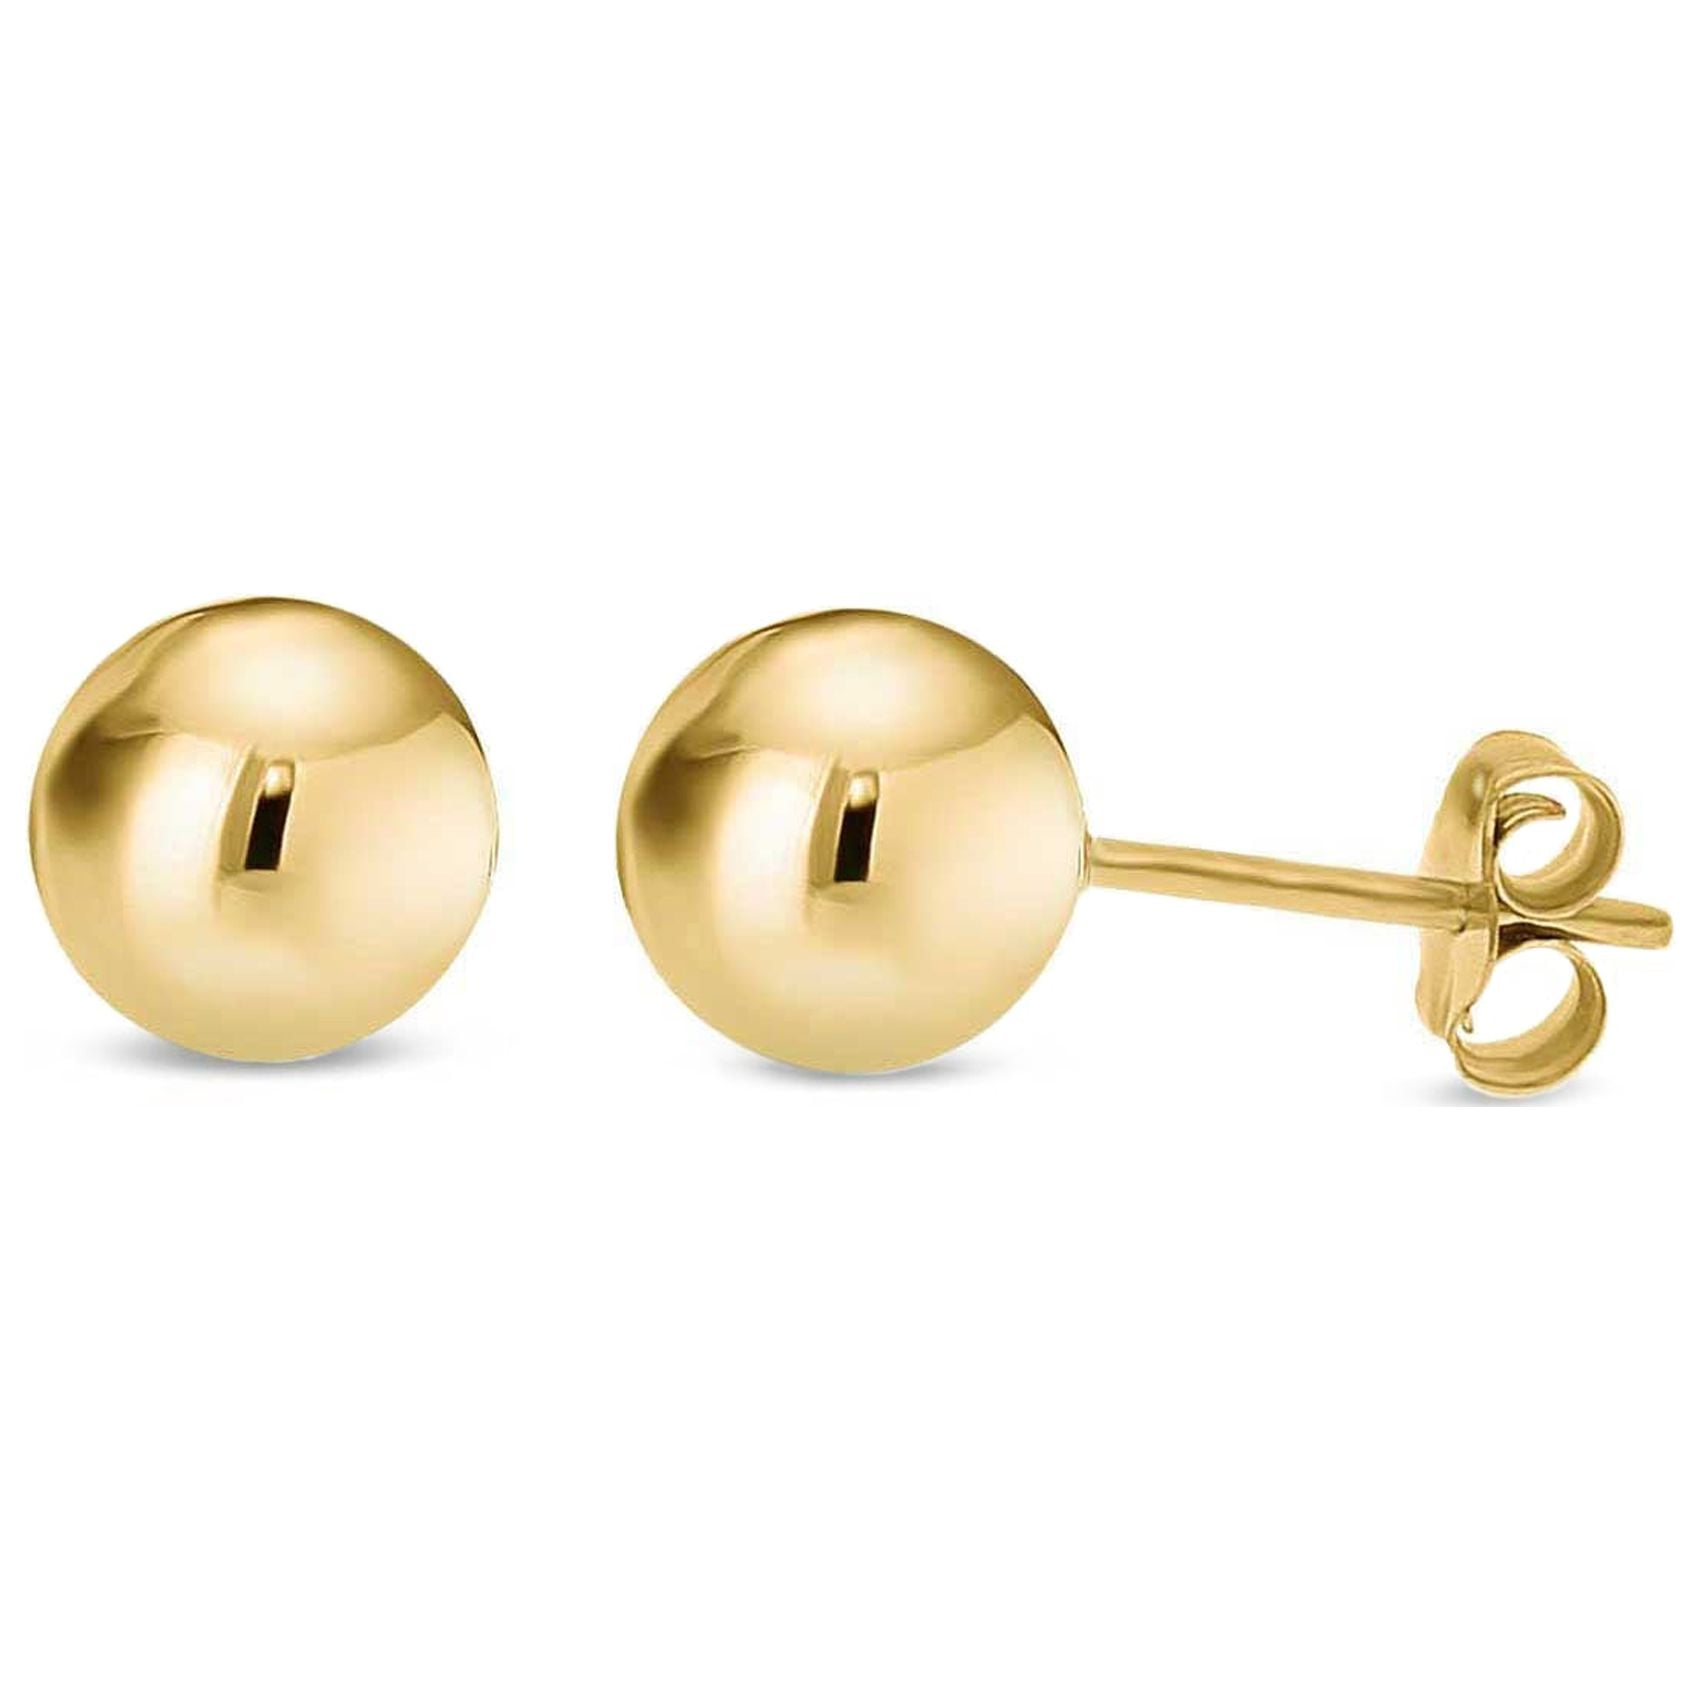 14k White Gold Curved Tear Drop Wire Earrings - 1.5 Grams